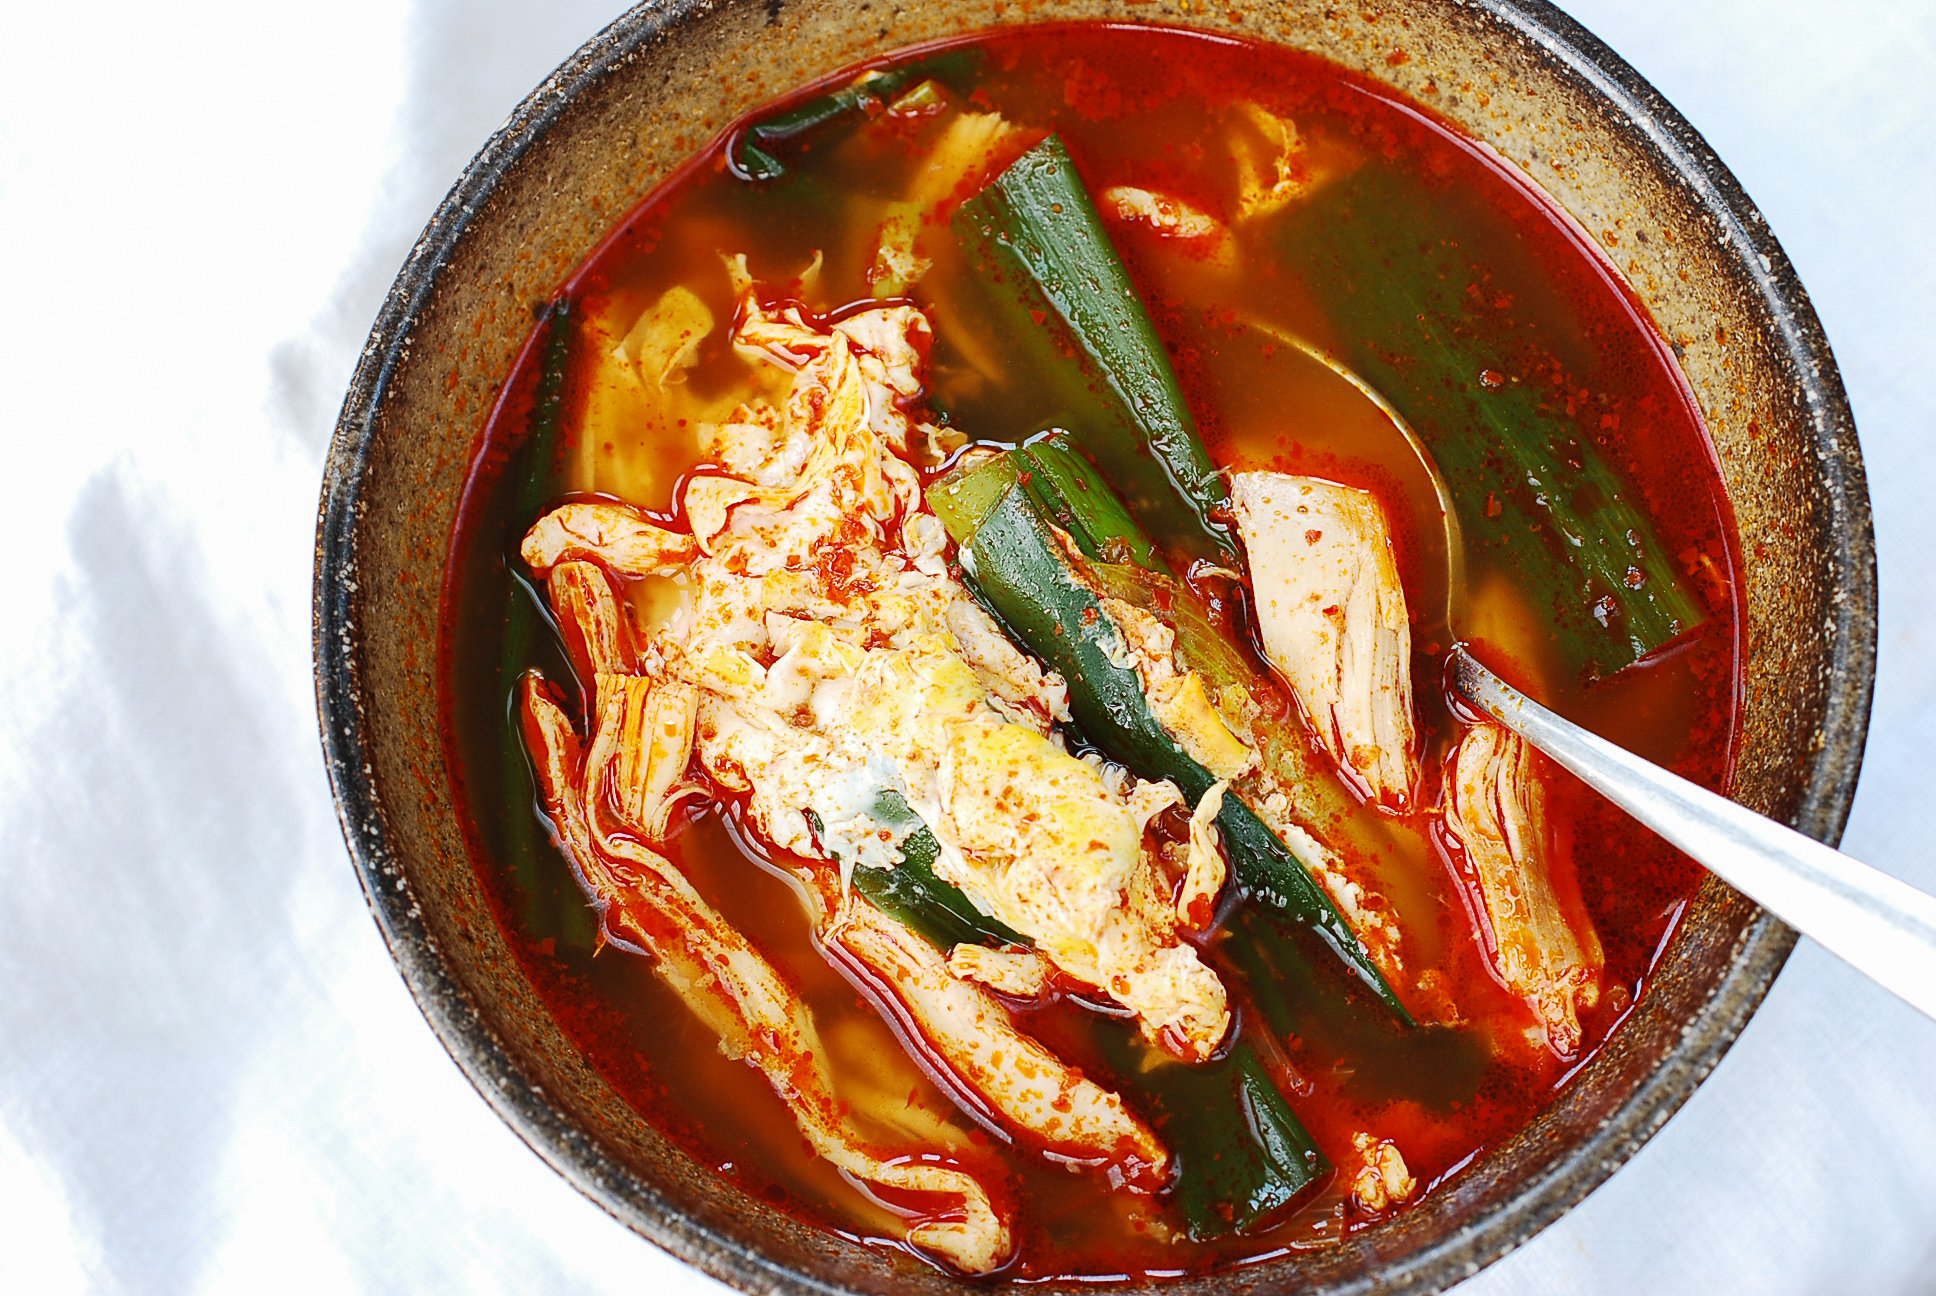 DSC 1852 2 - Dakgaejang (Spicy Chicken Soup with Scallions)